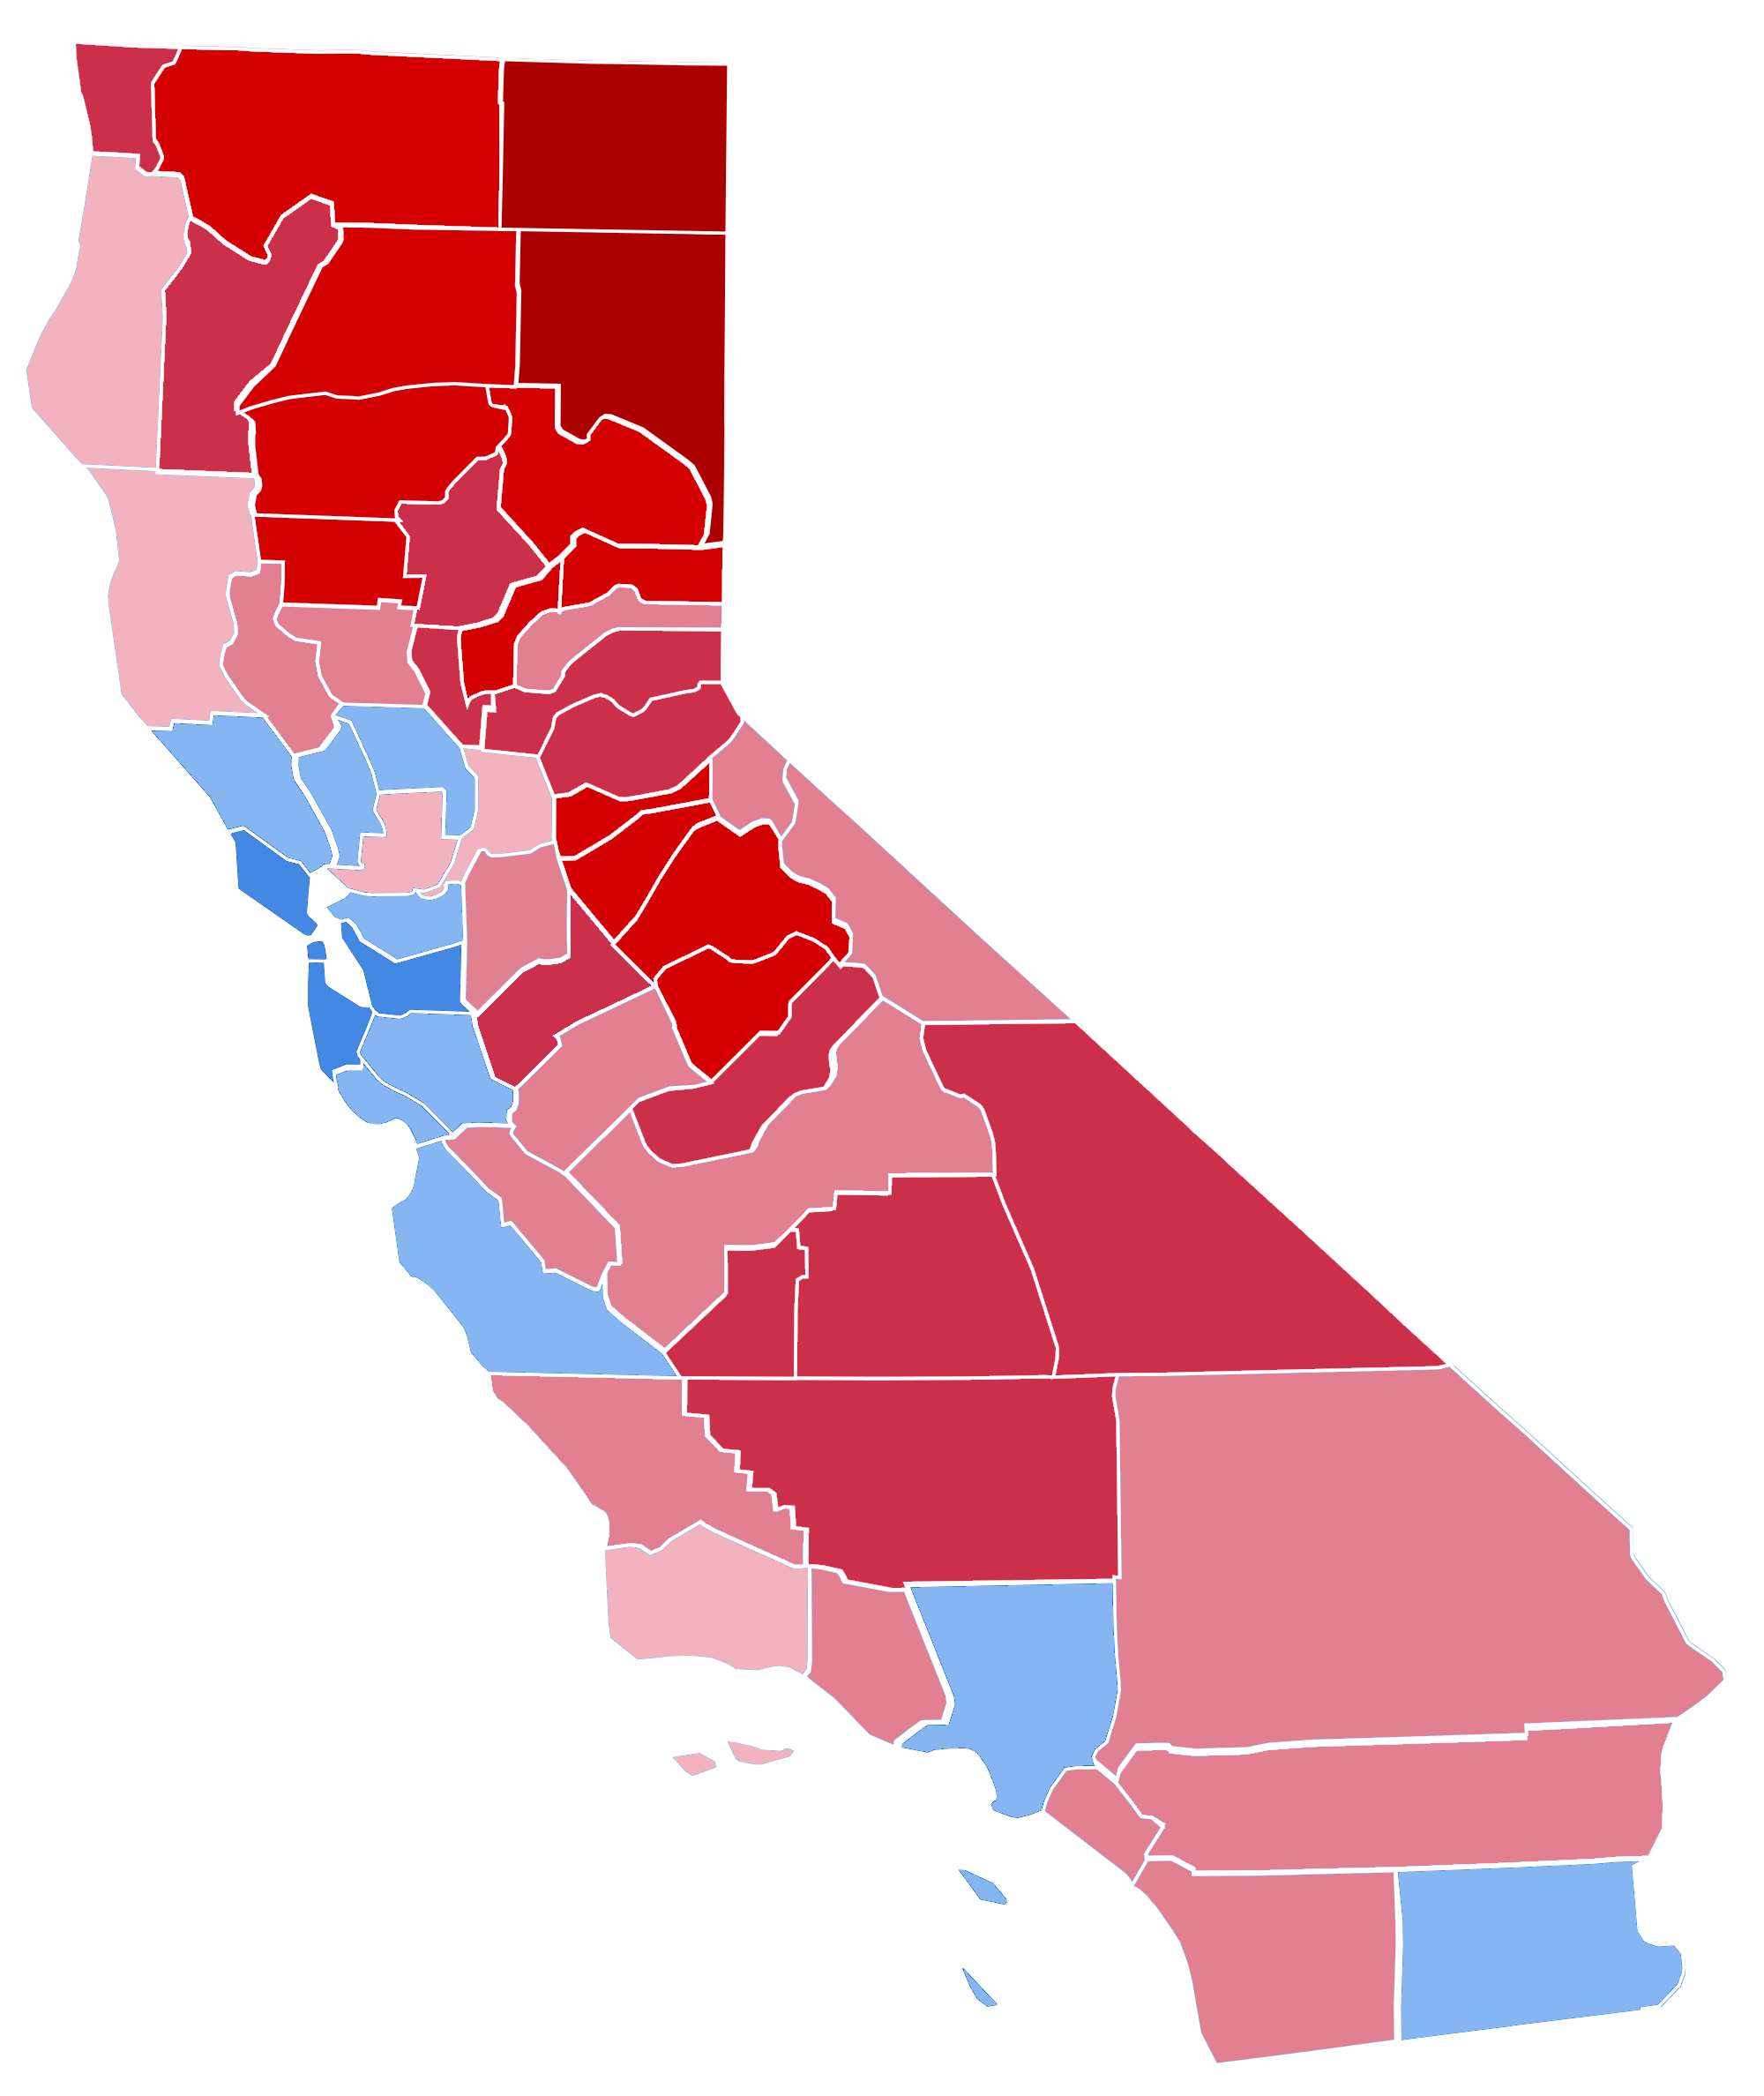 California_Presidential_Election_Results_2016_Republican_Landslide_15.06%.png